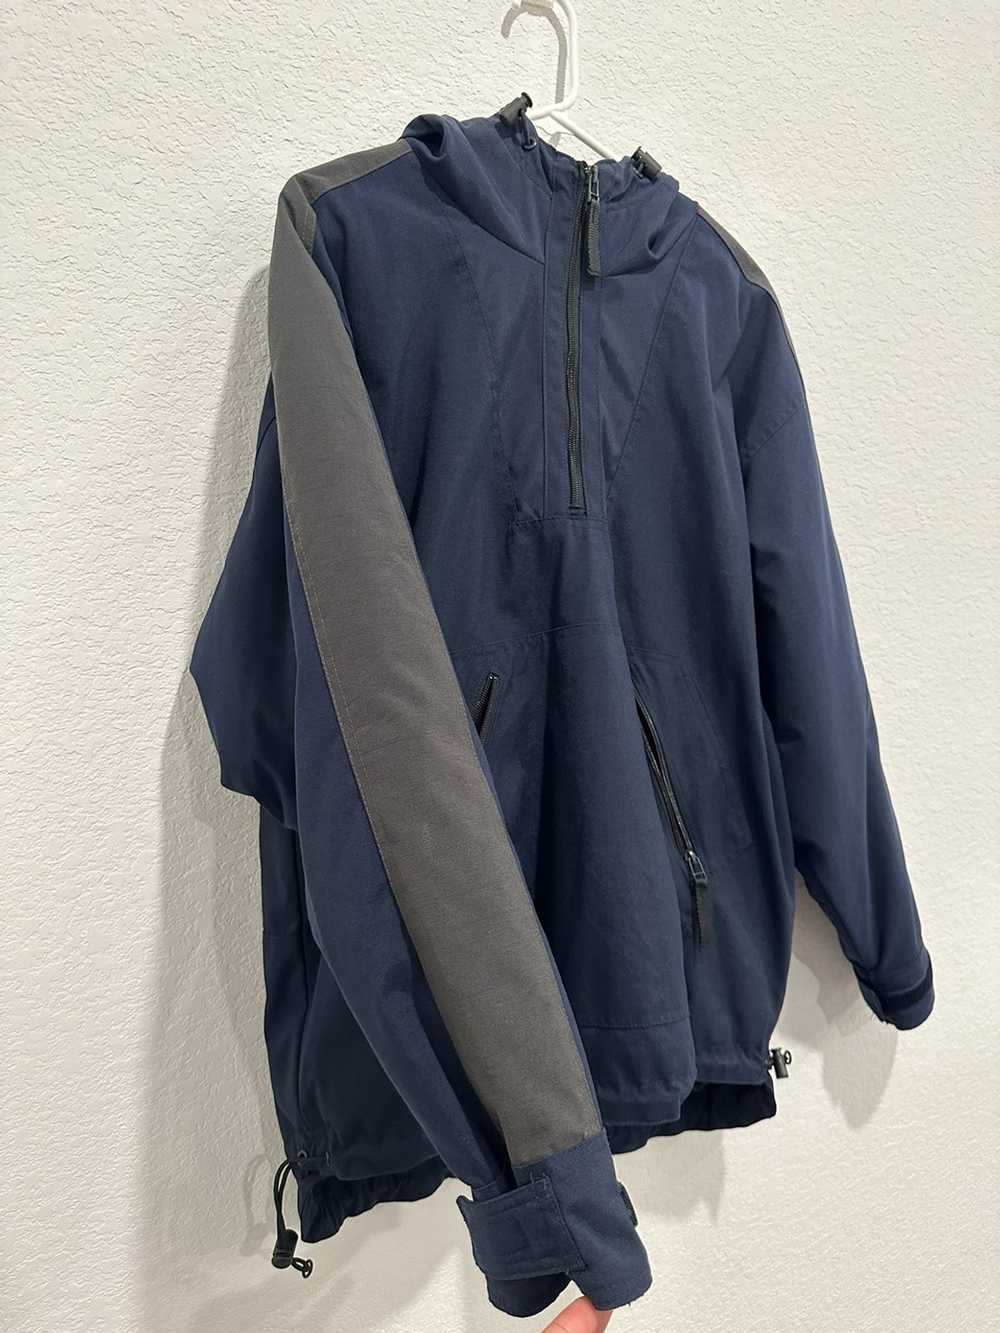 Gap × Vintage gap half 1/2 zip jacket fleece lined - image 2